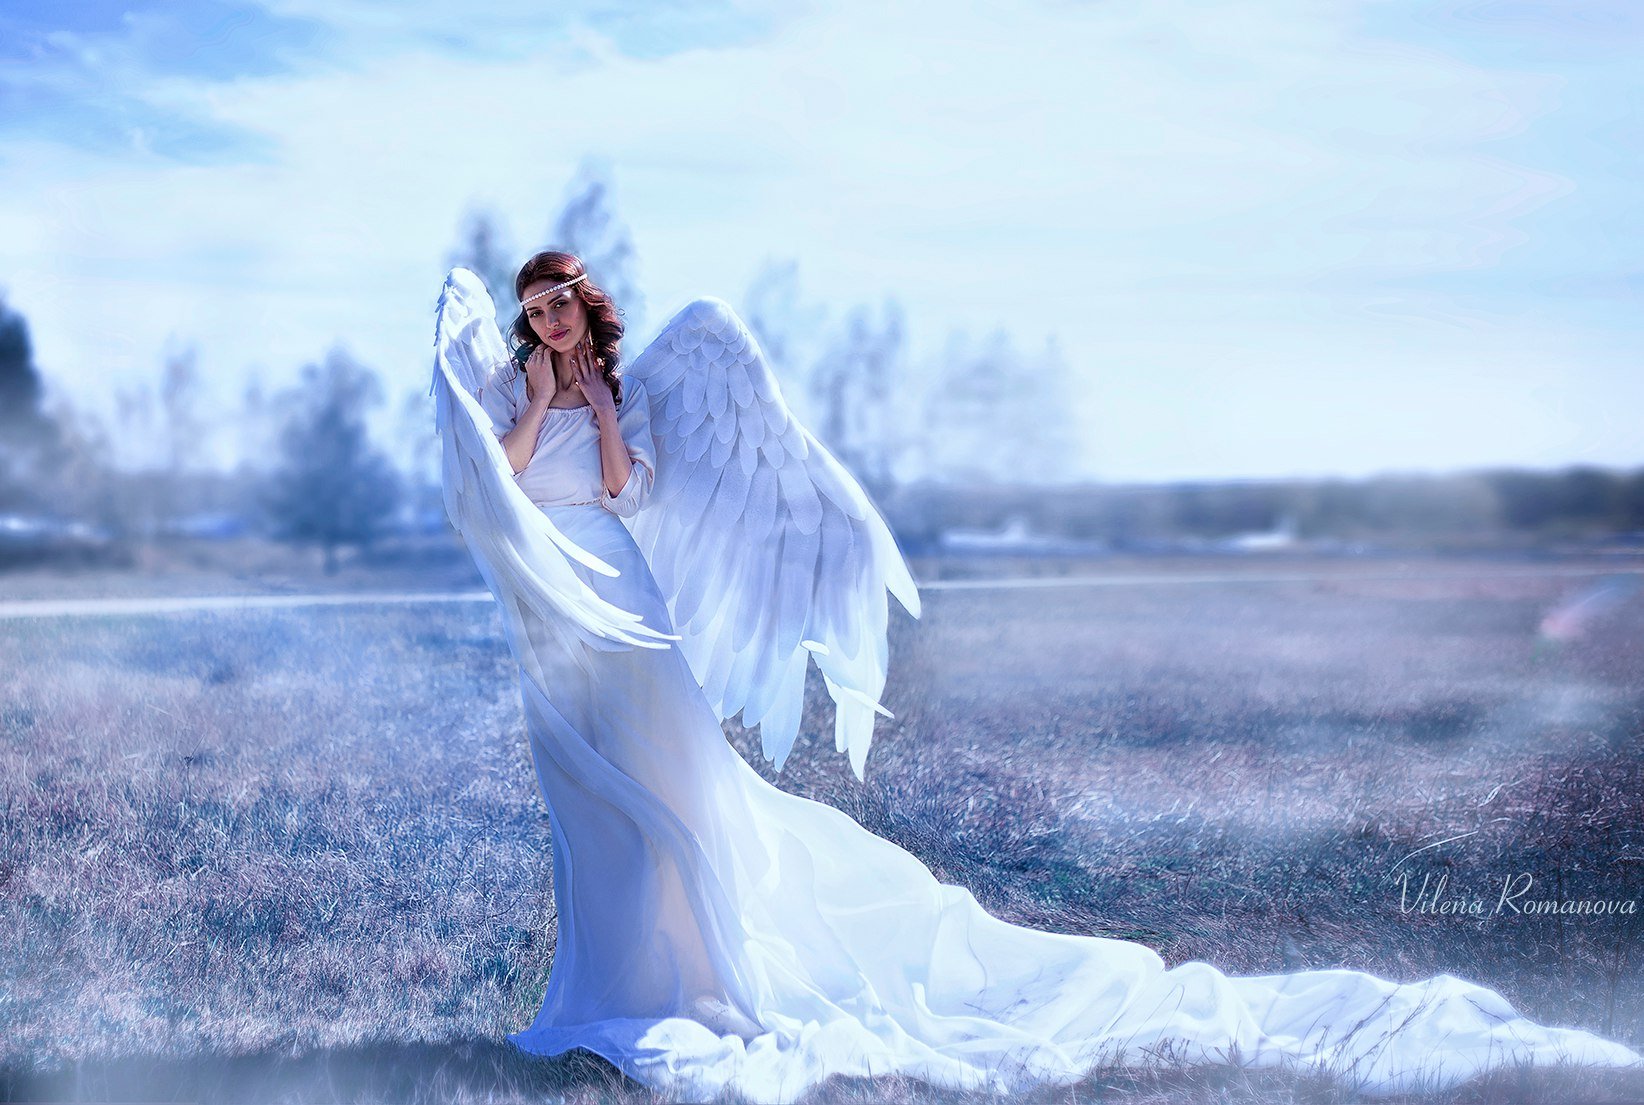 Angels women. Девушка - ангел. Дева-ангел. Женщина с крыльями. Красивый ангел.